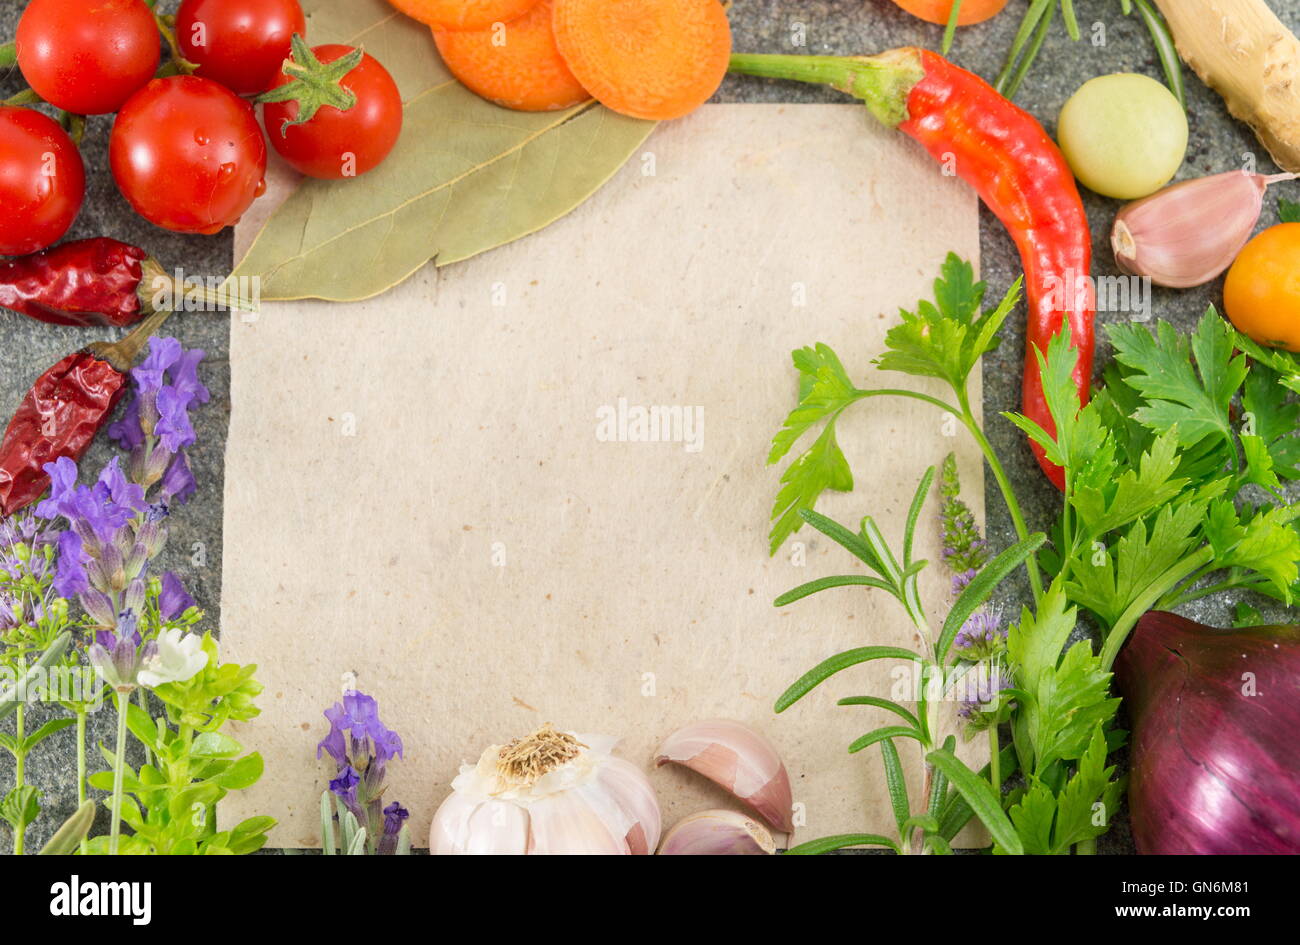 Papel para escribir la receta rodeado por hortalizas frescas Foto de stock